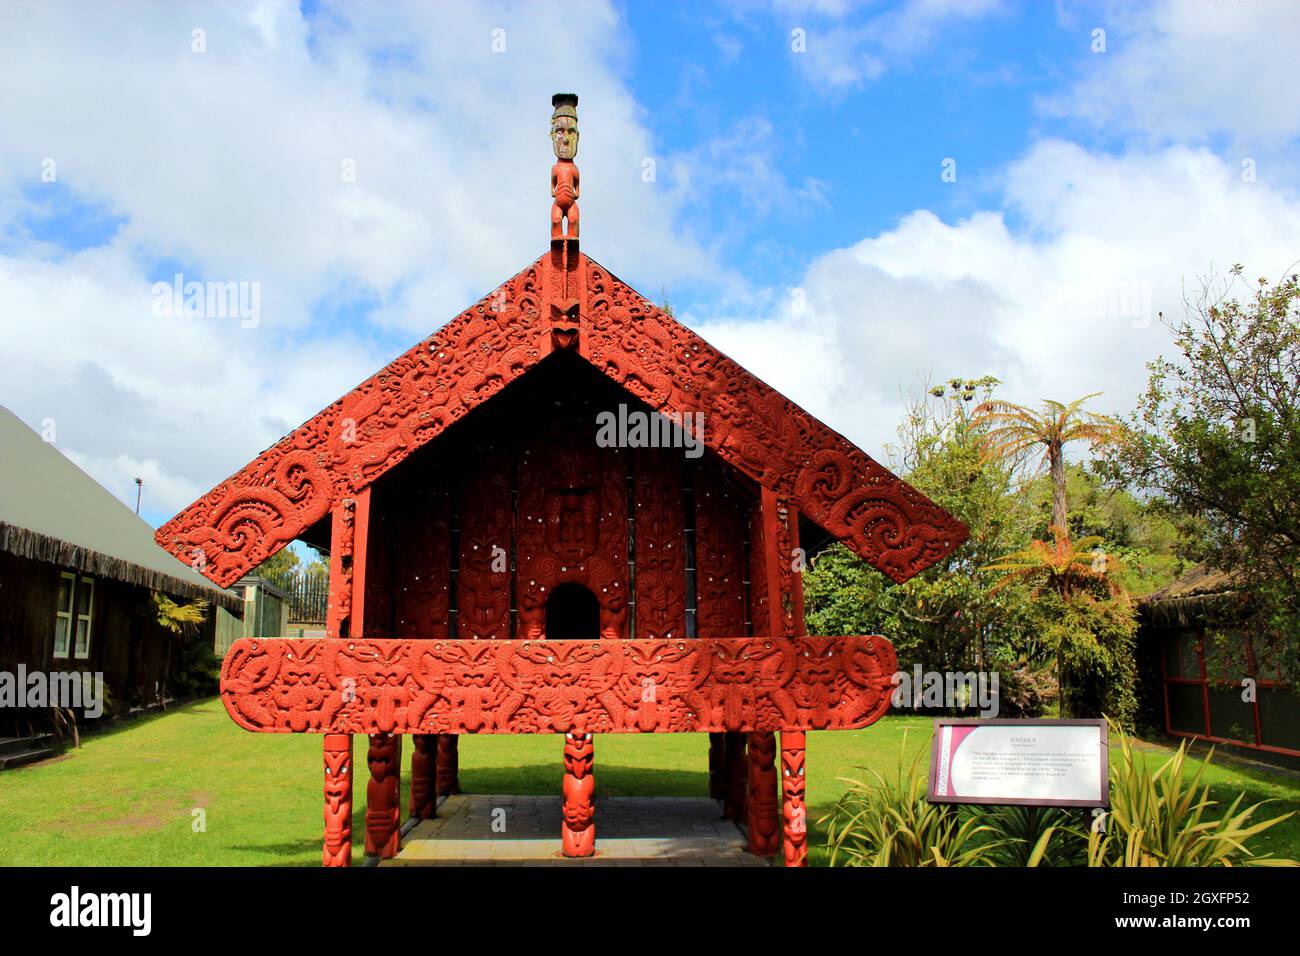 Maori cultural and woodcraft. Rotorua. New Zealand. 16 Nov 2011 Stock Photo